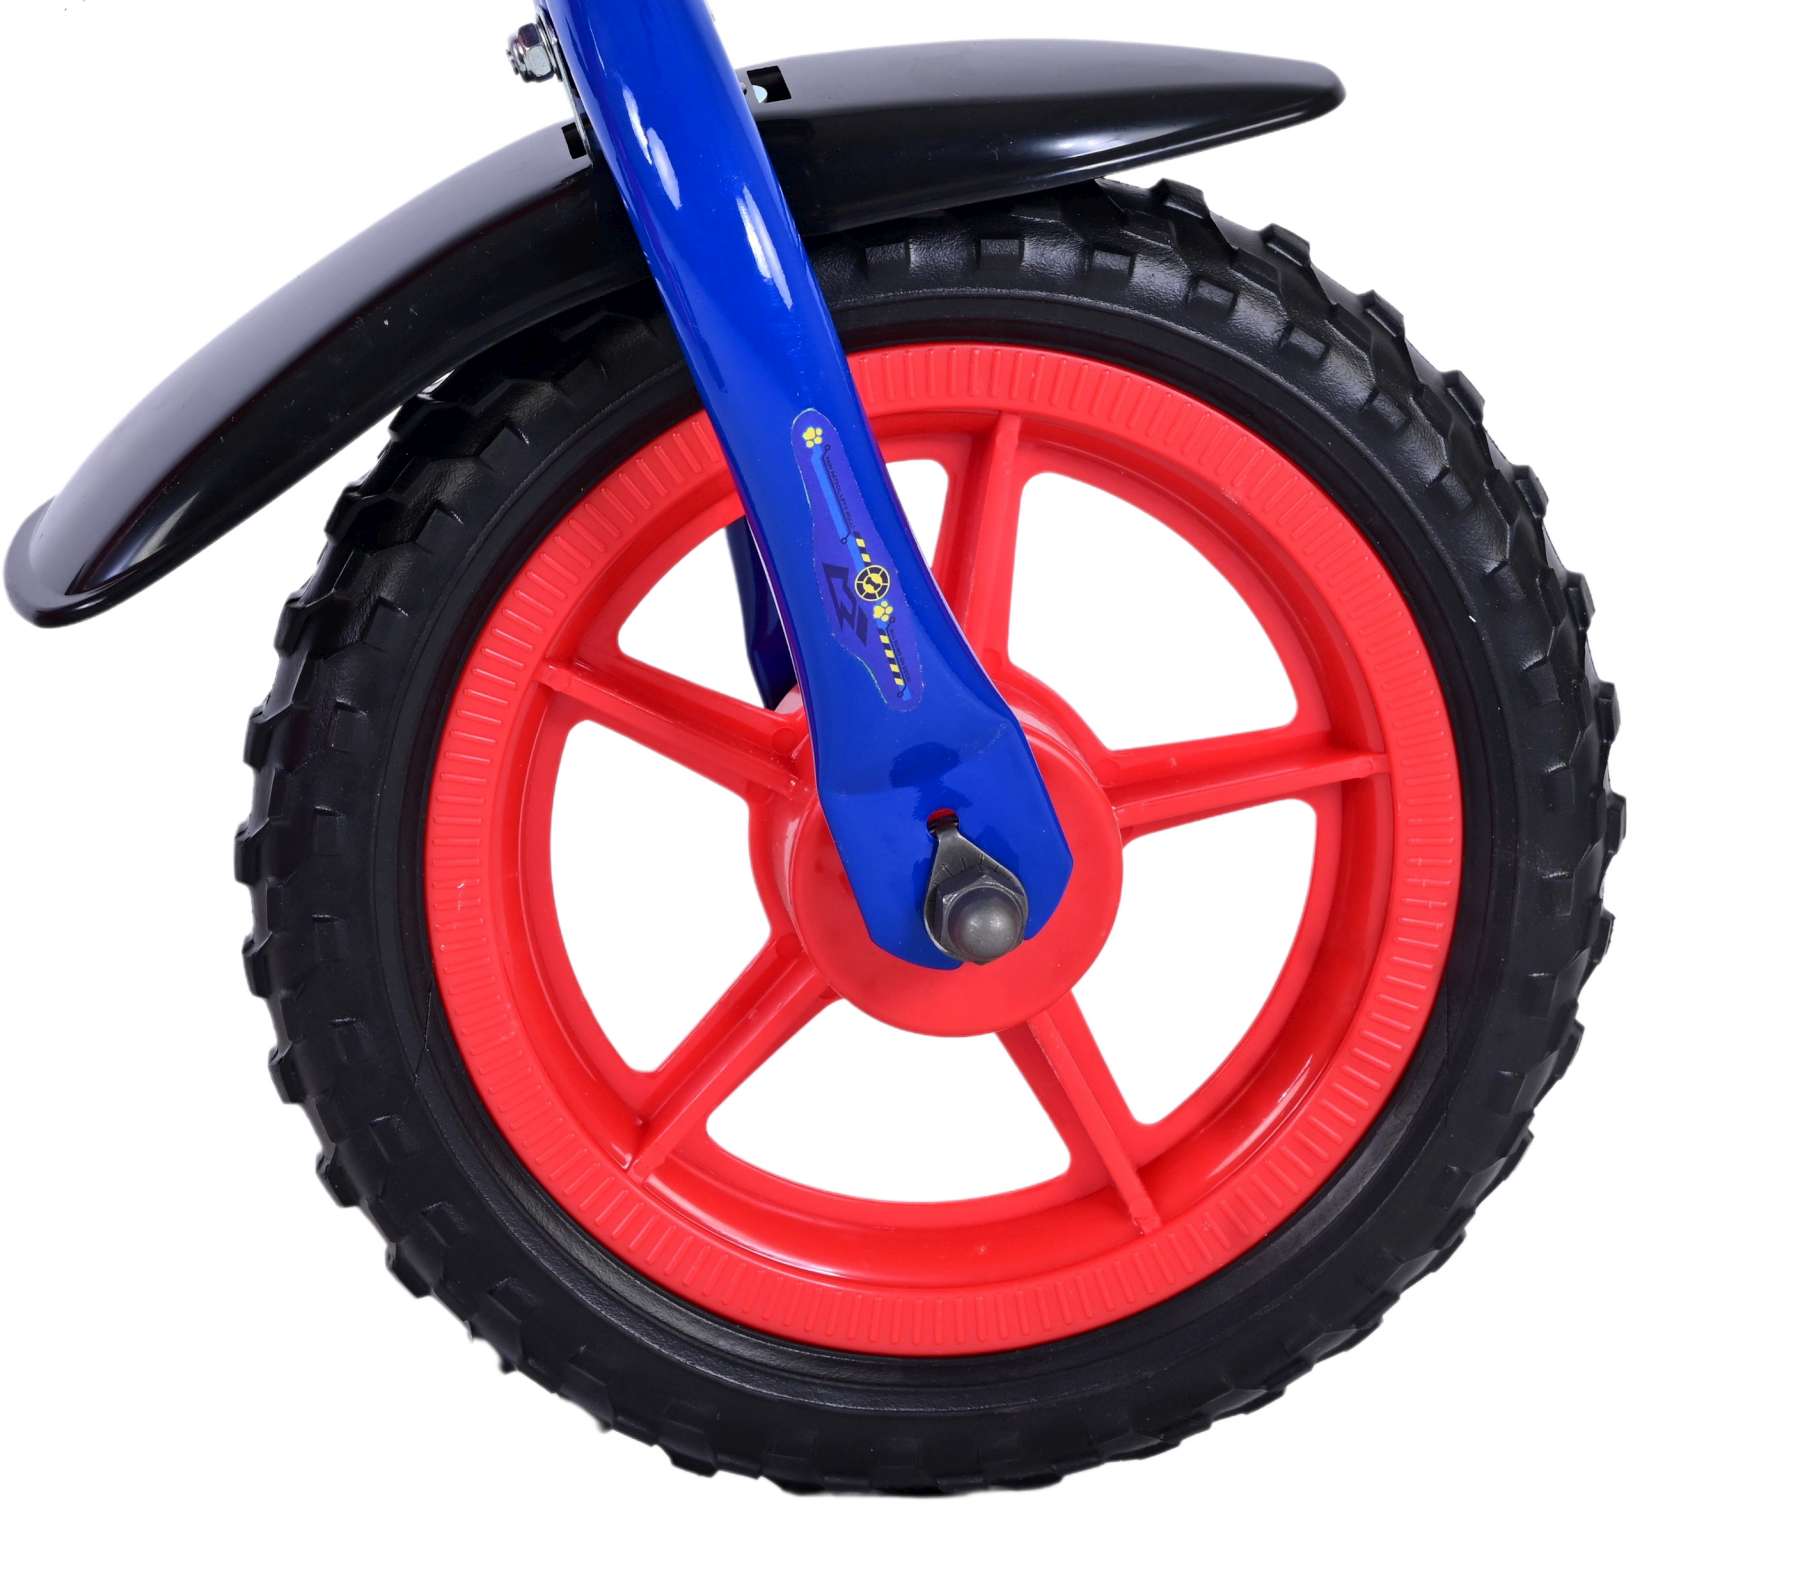 Kinderfahrrad Paw Patrol für Jungen 10 Zoll Kinderrad in Rot/Blau